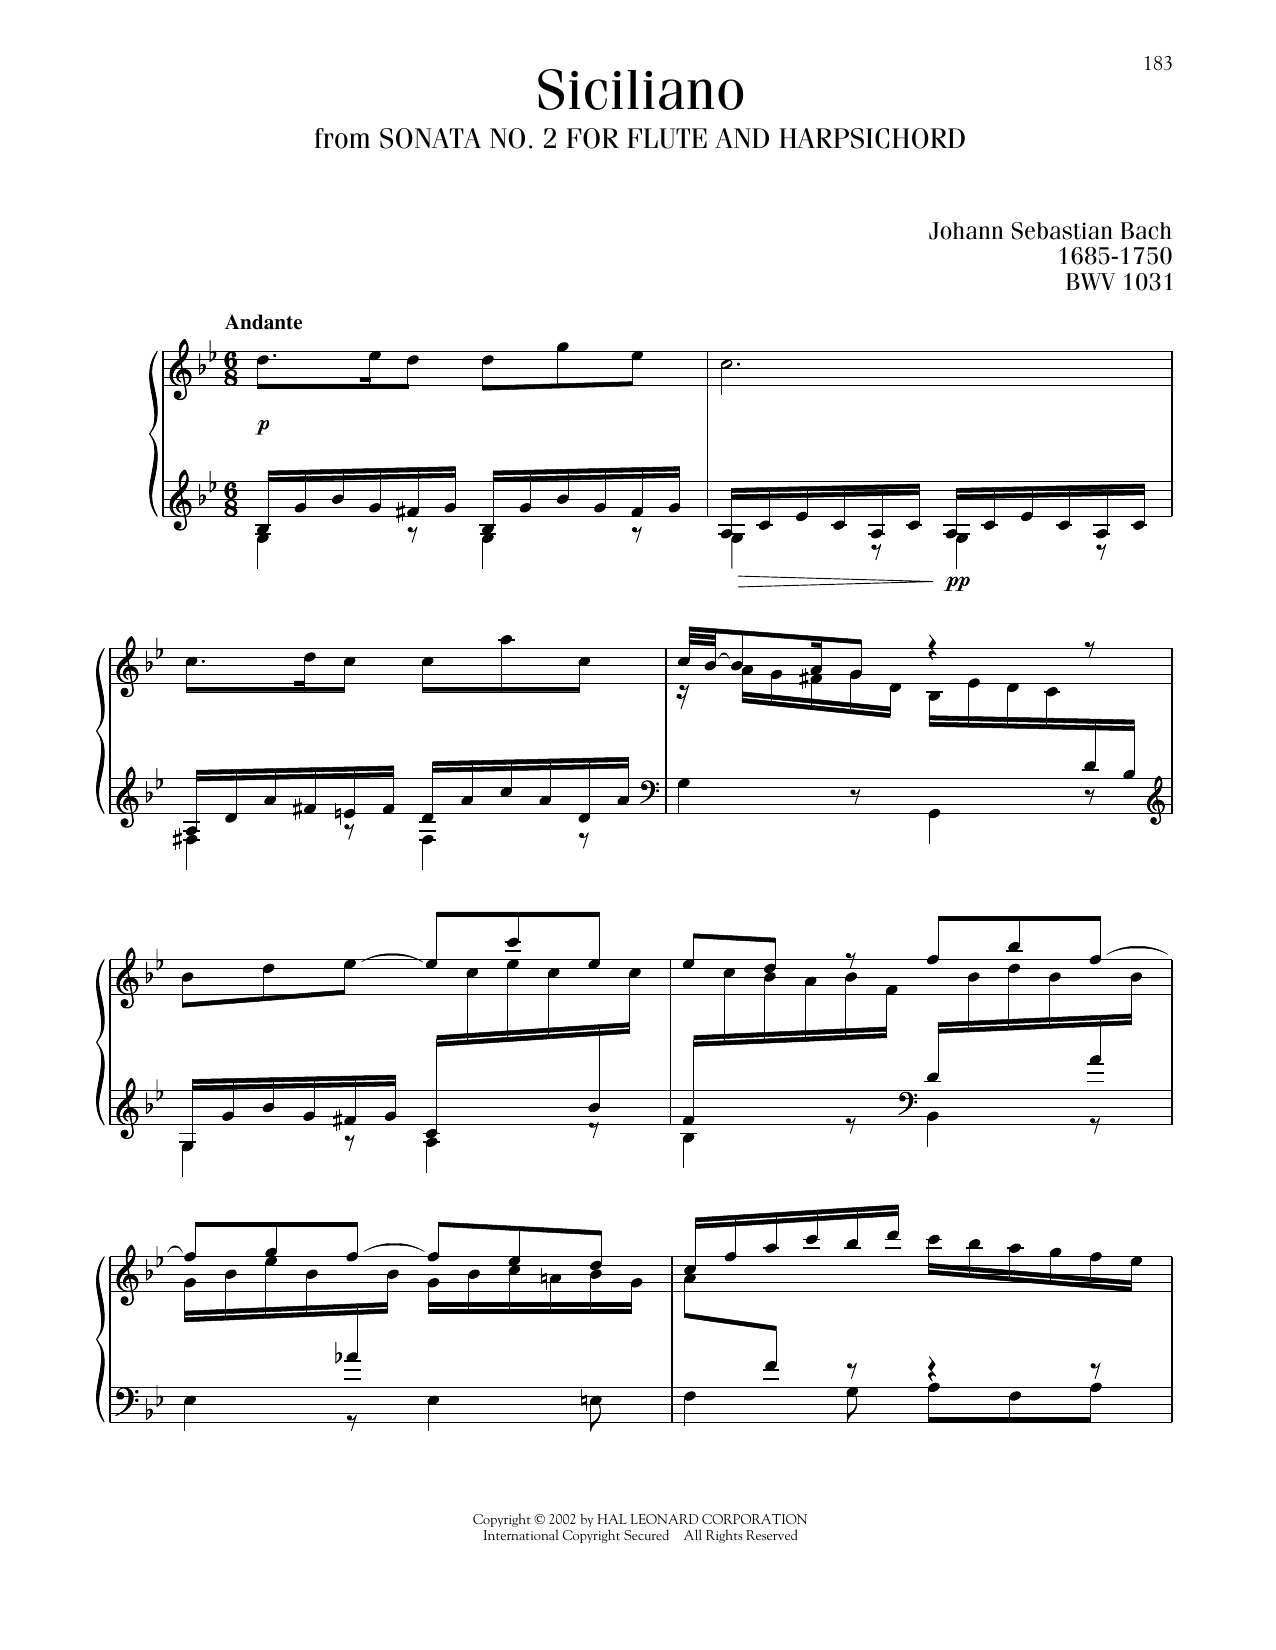 Johann Sebastian Bach Siciliano, BWV 1031 Sheet Music Notes & Chords for Piano Solo - Download or Print PDF